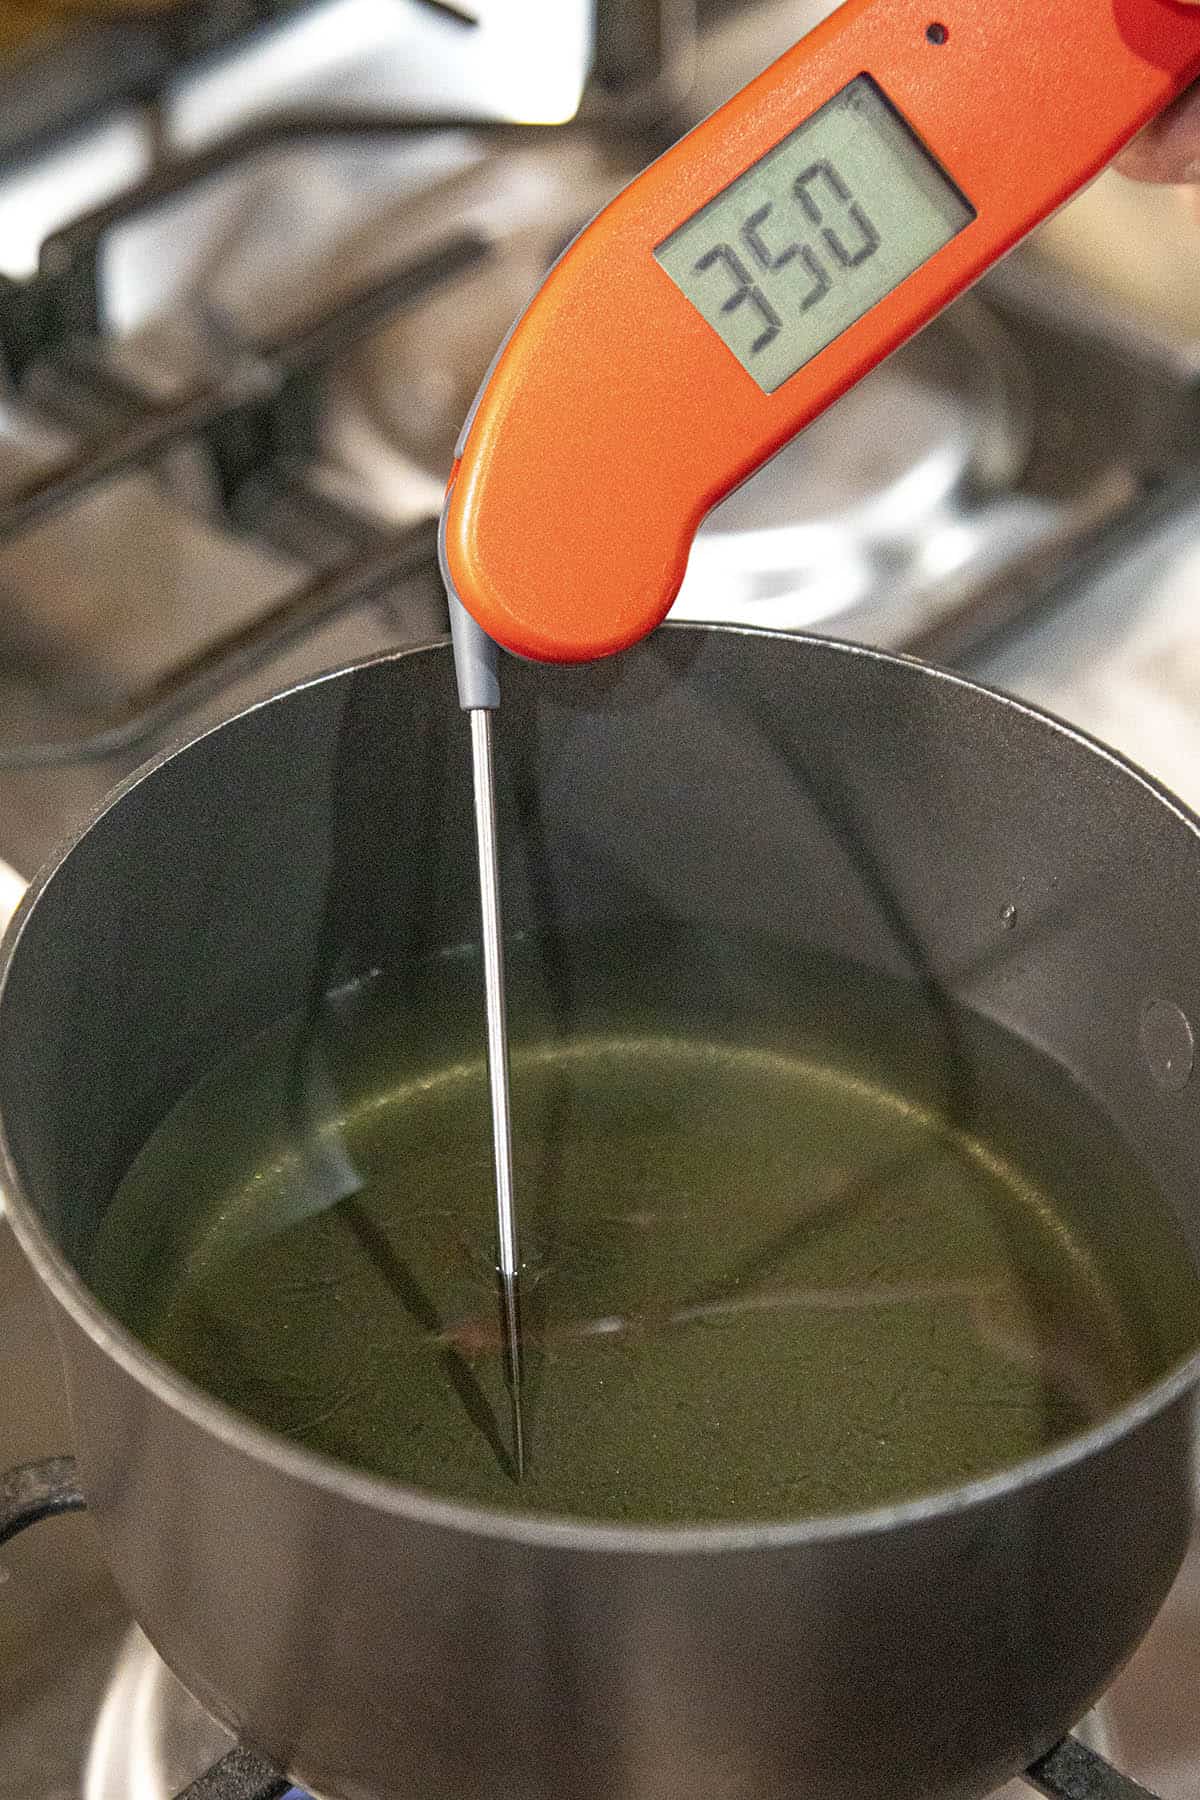 Measuring the oil temperature to make homemade chili oil